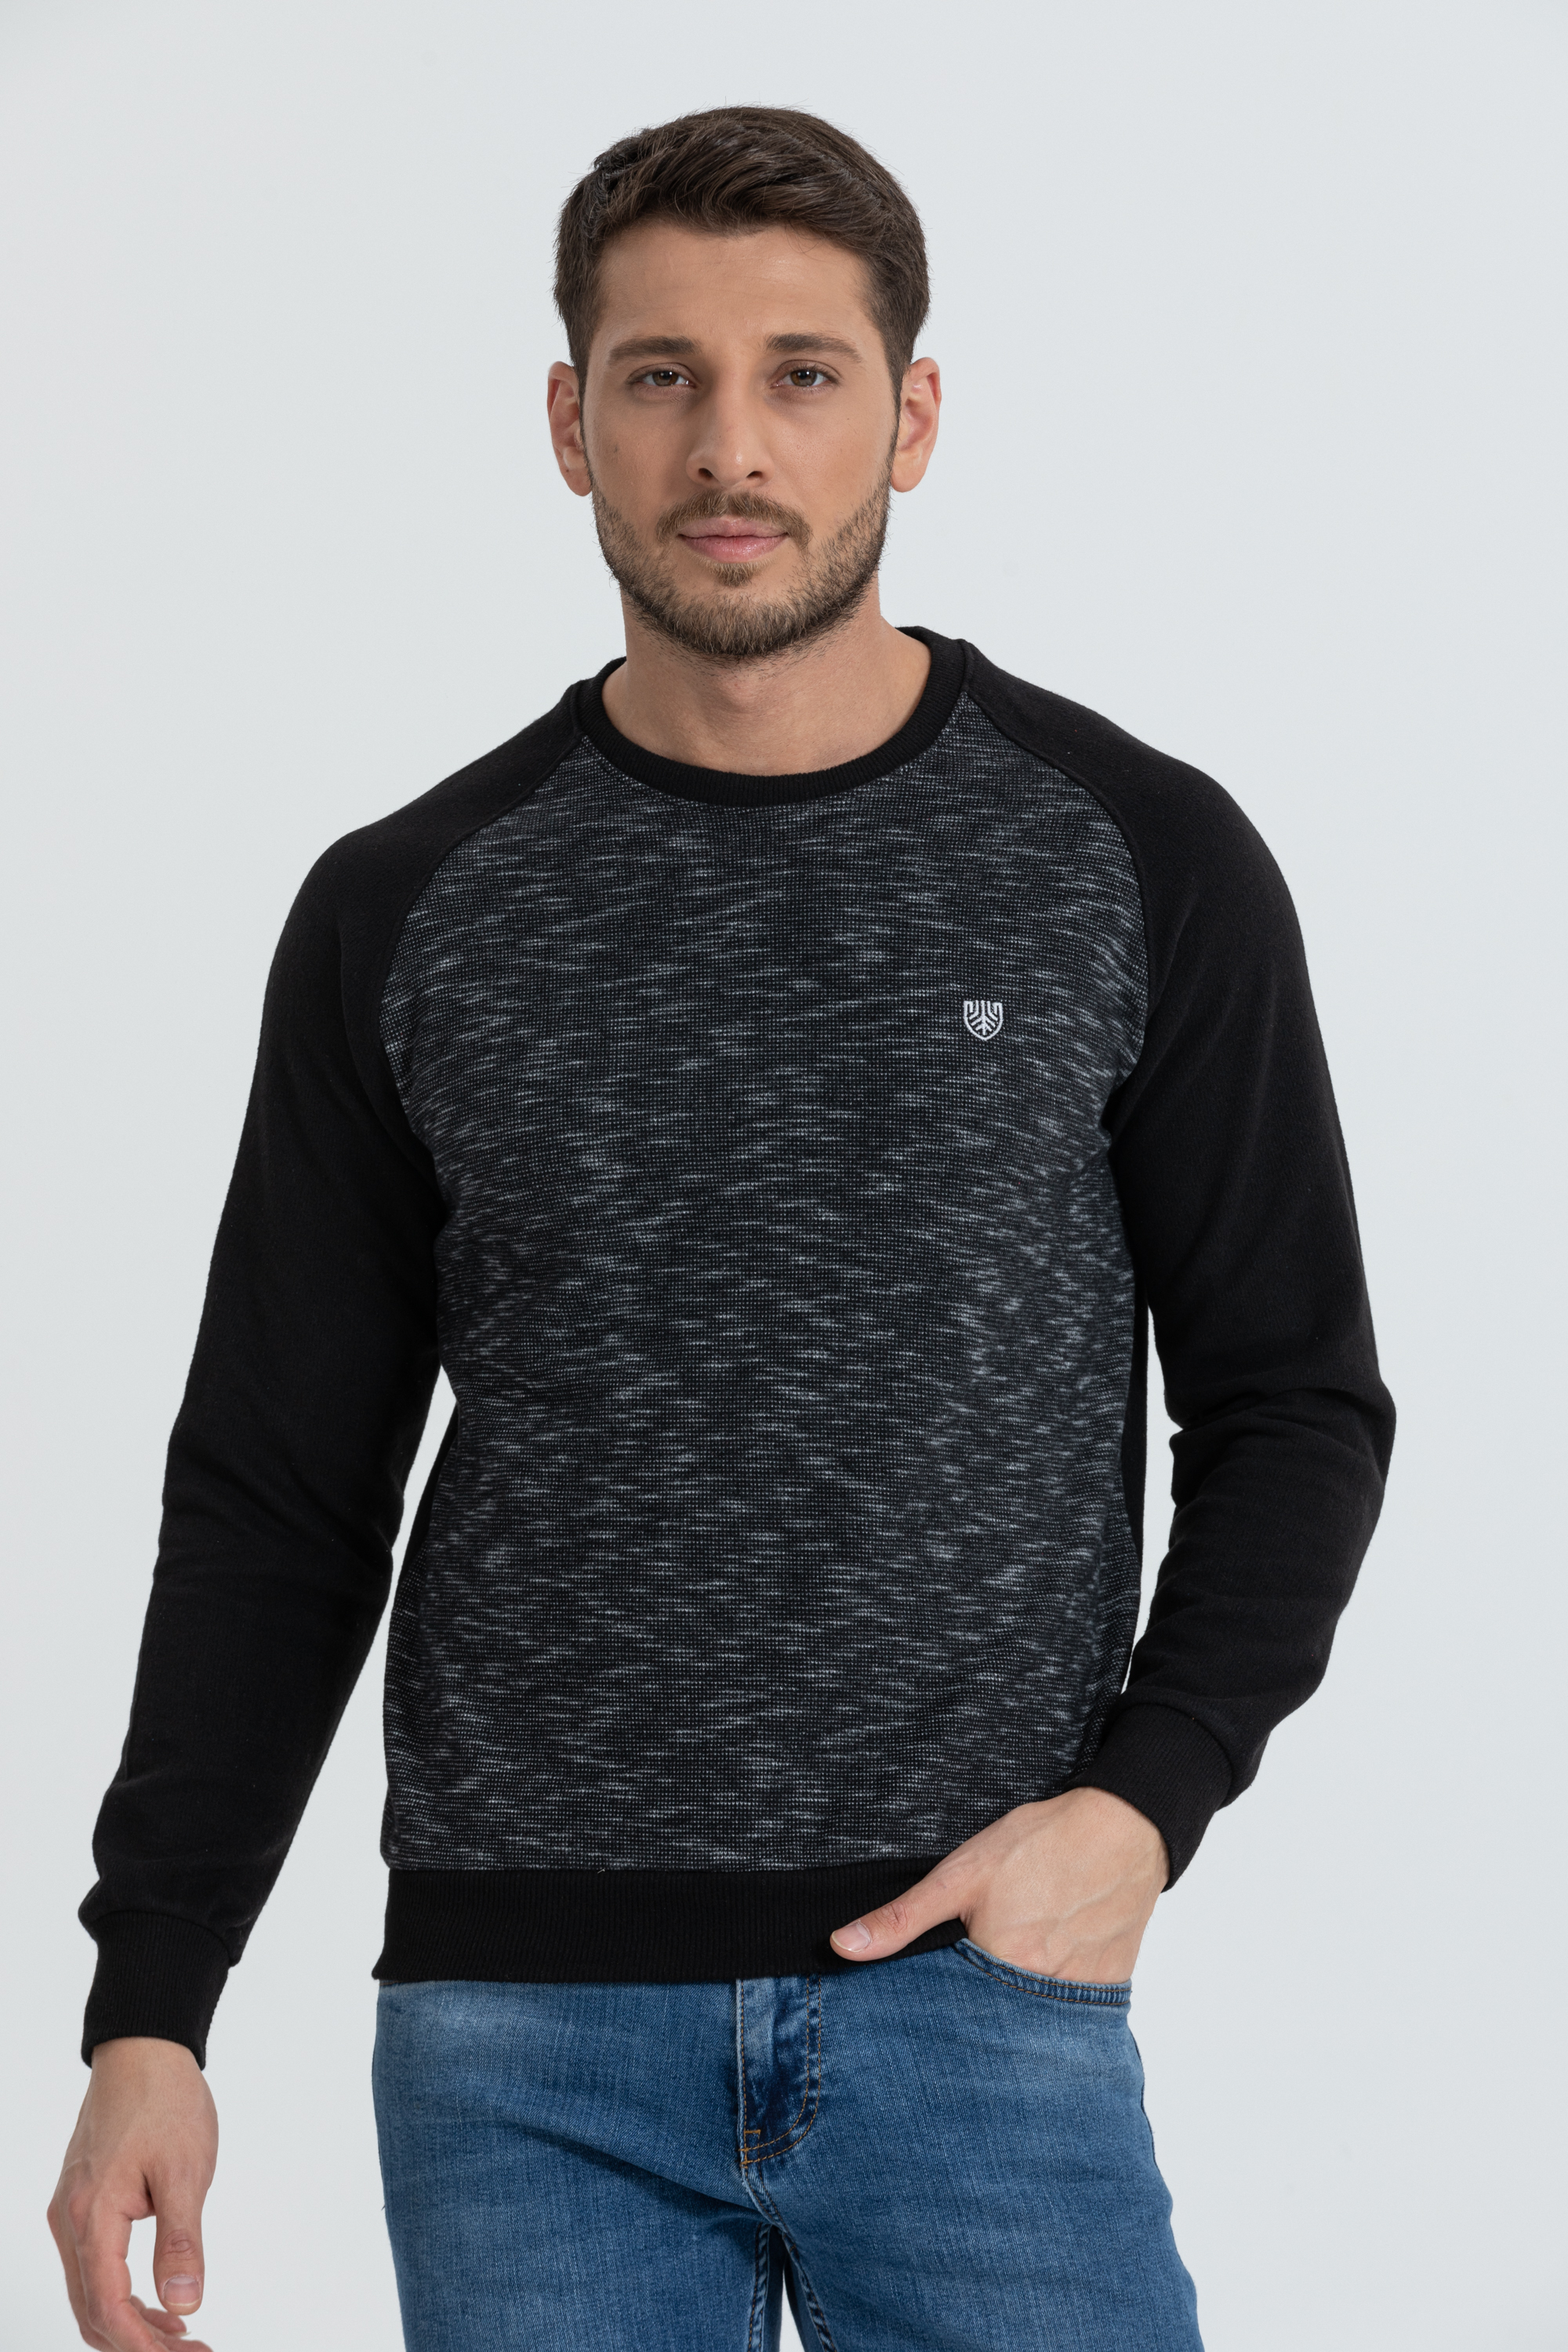 Flamlı Model Siyah 0 Yaka Uzun Kollu Sweatshirt